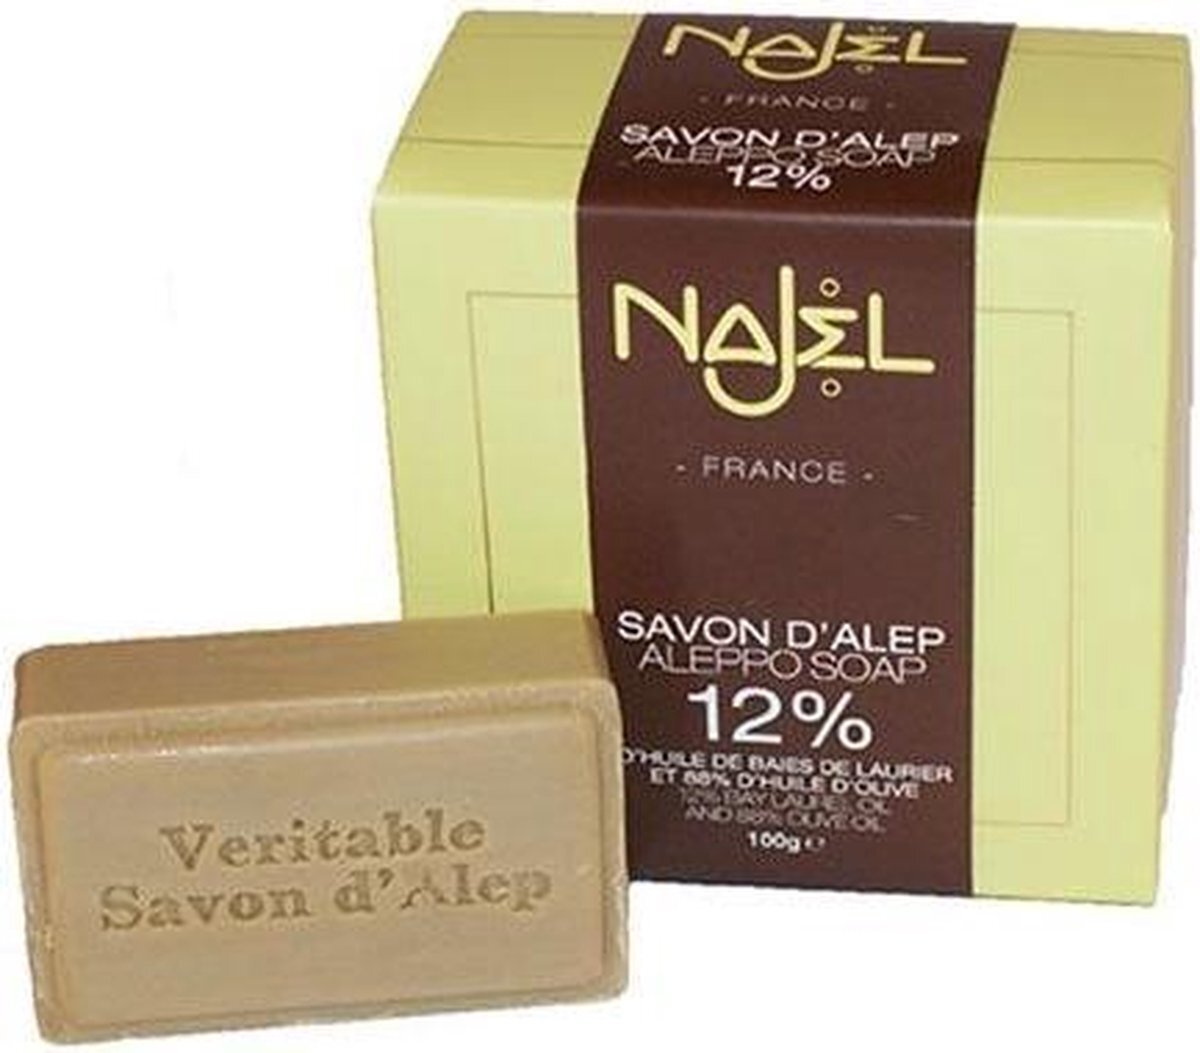 Najel collection 12% laurierolie zeep - 100g